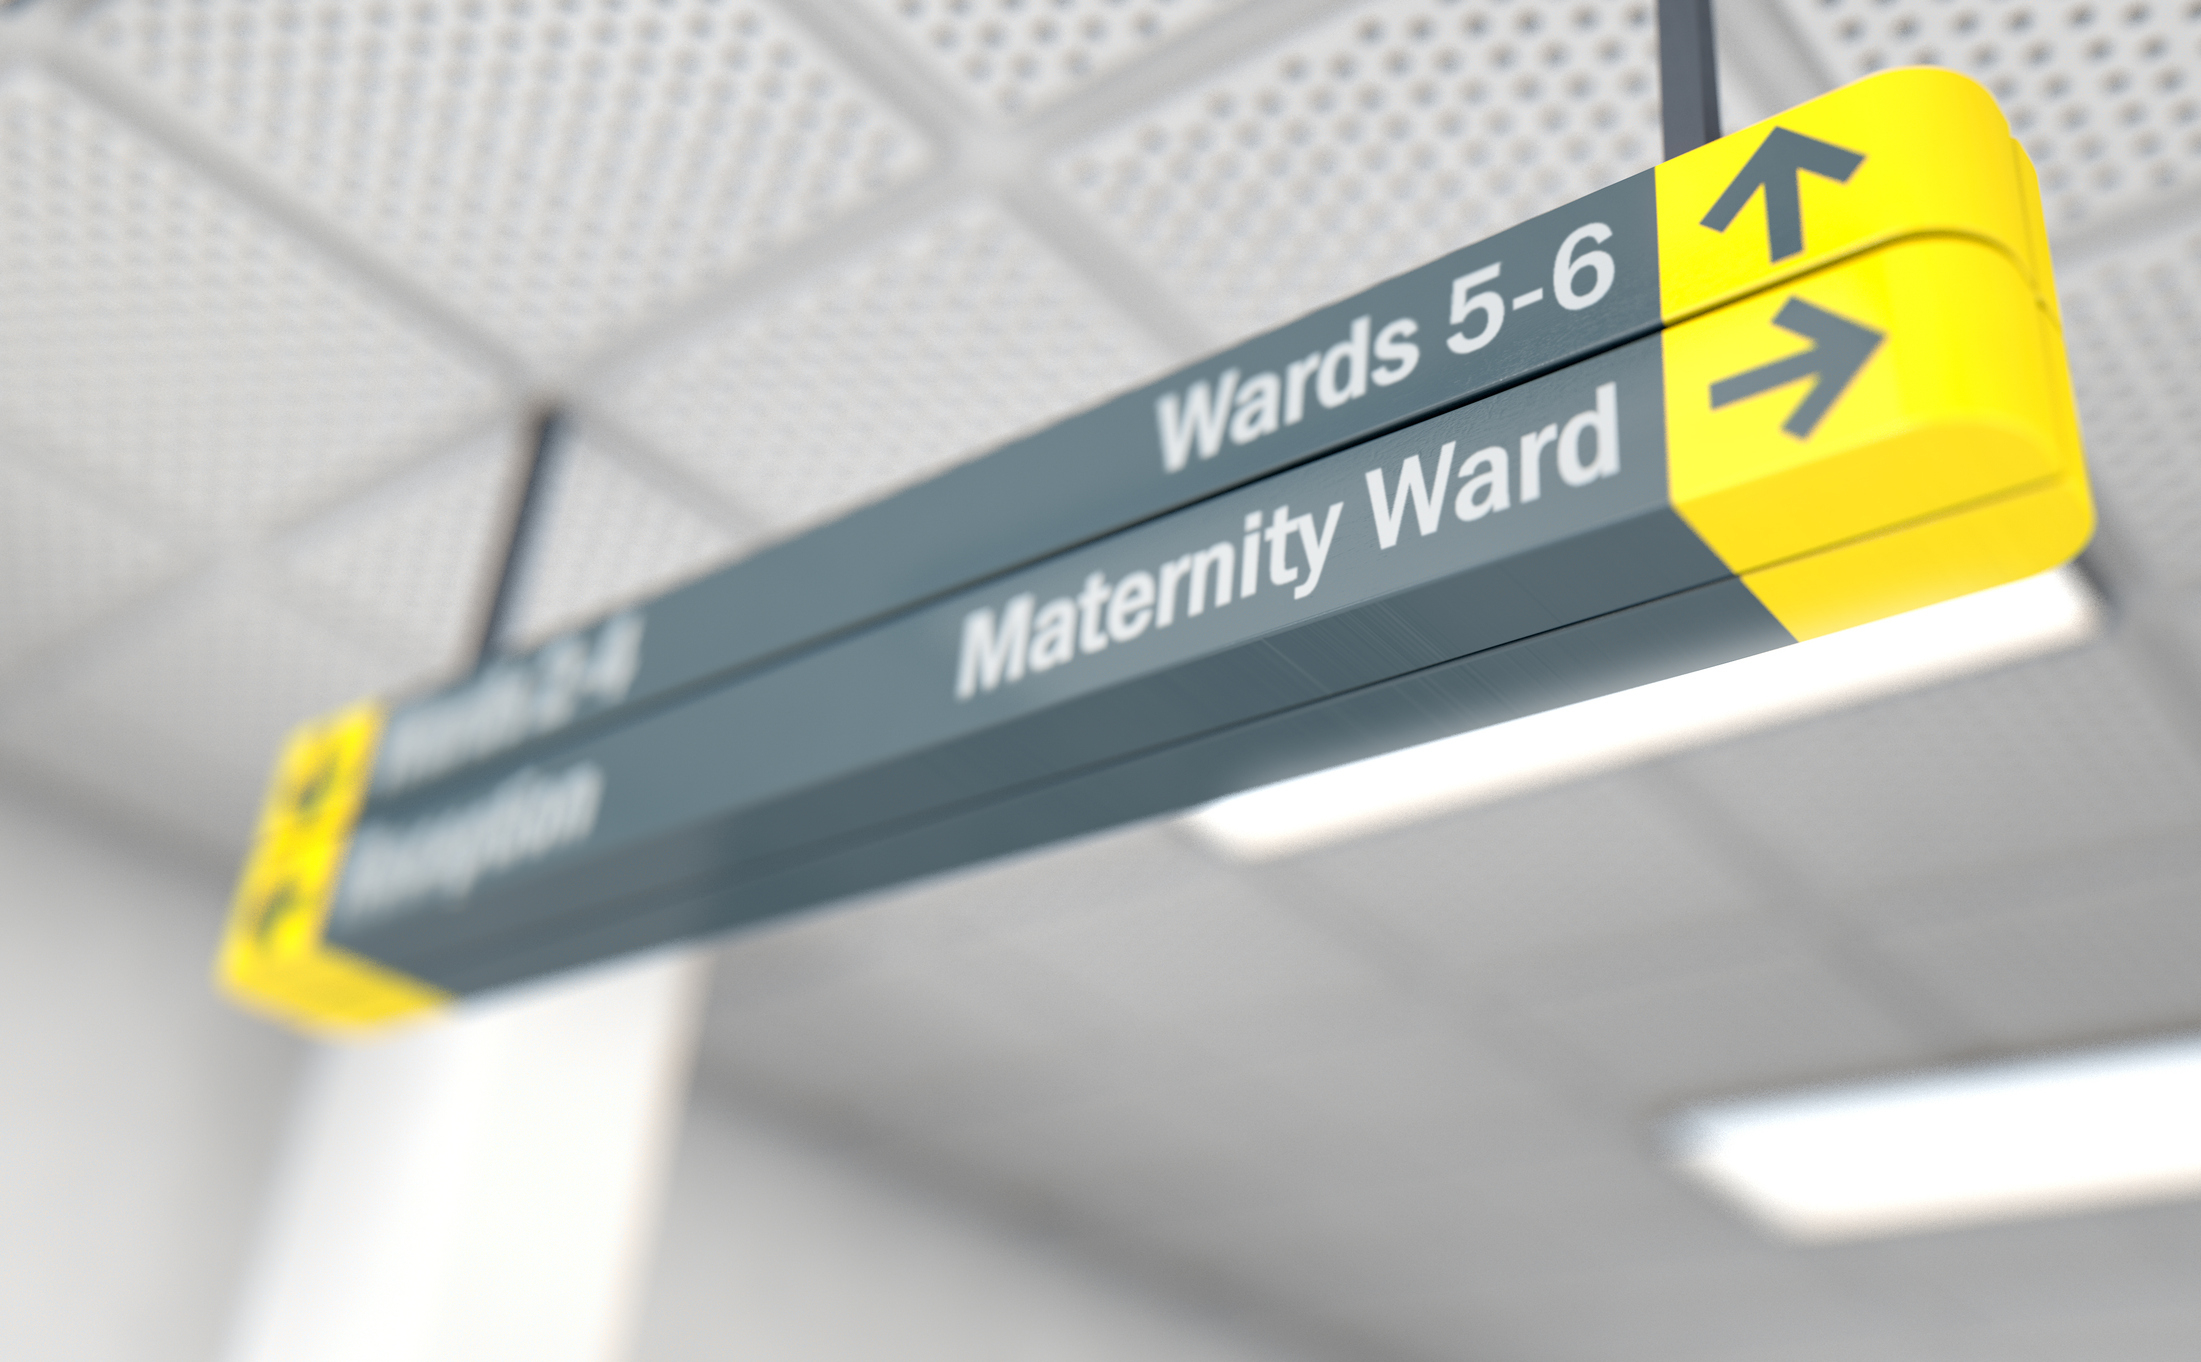 Hospital signage pointing to Wards 5-6, Maternity Ward with arrow indicators